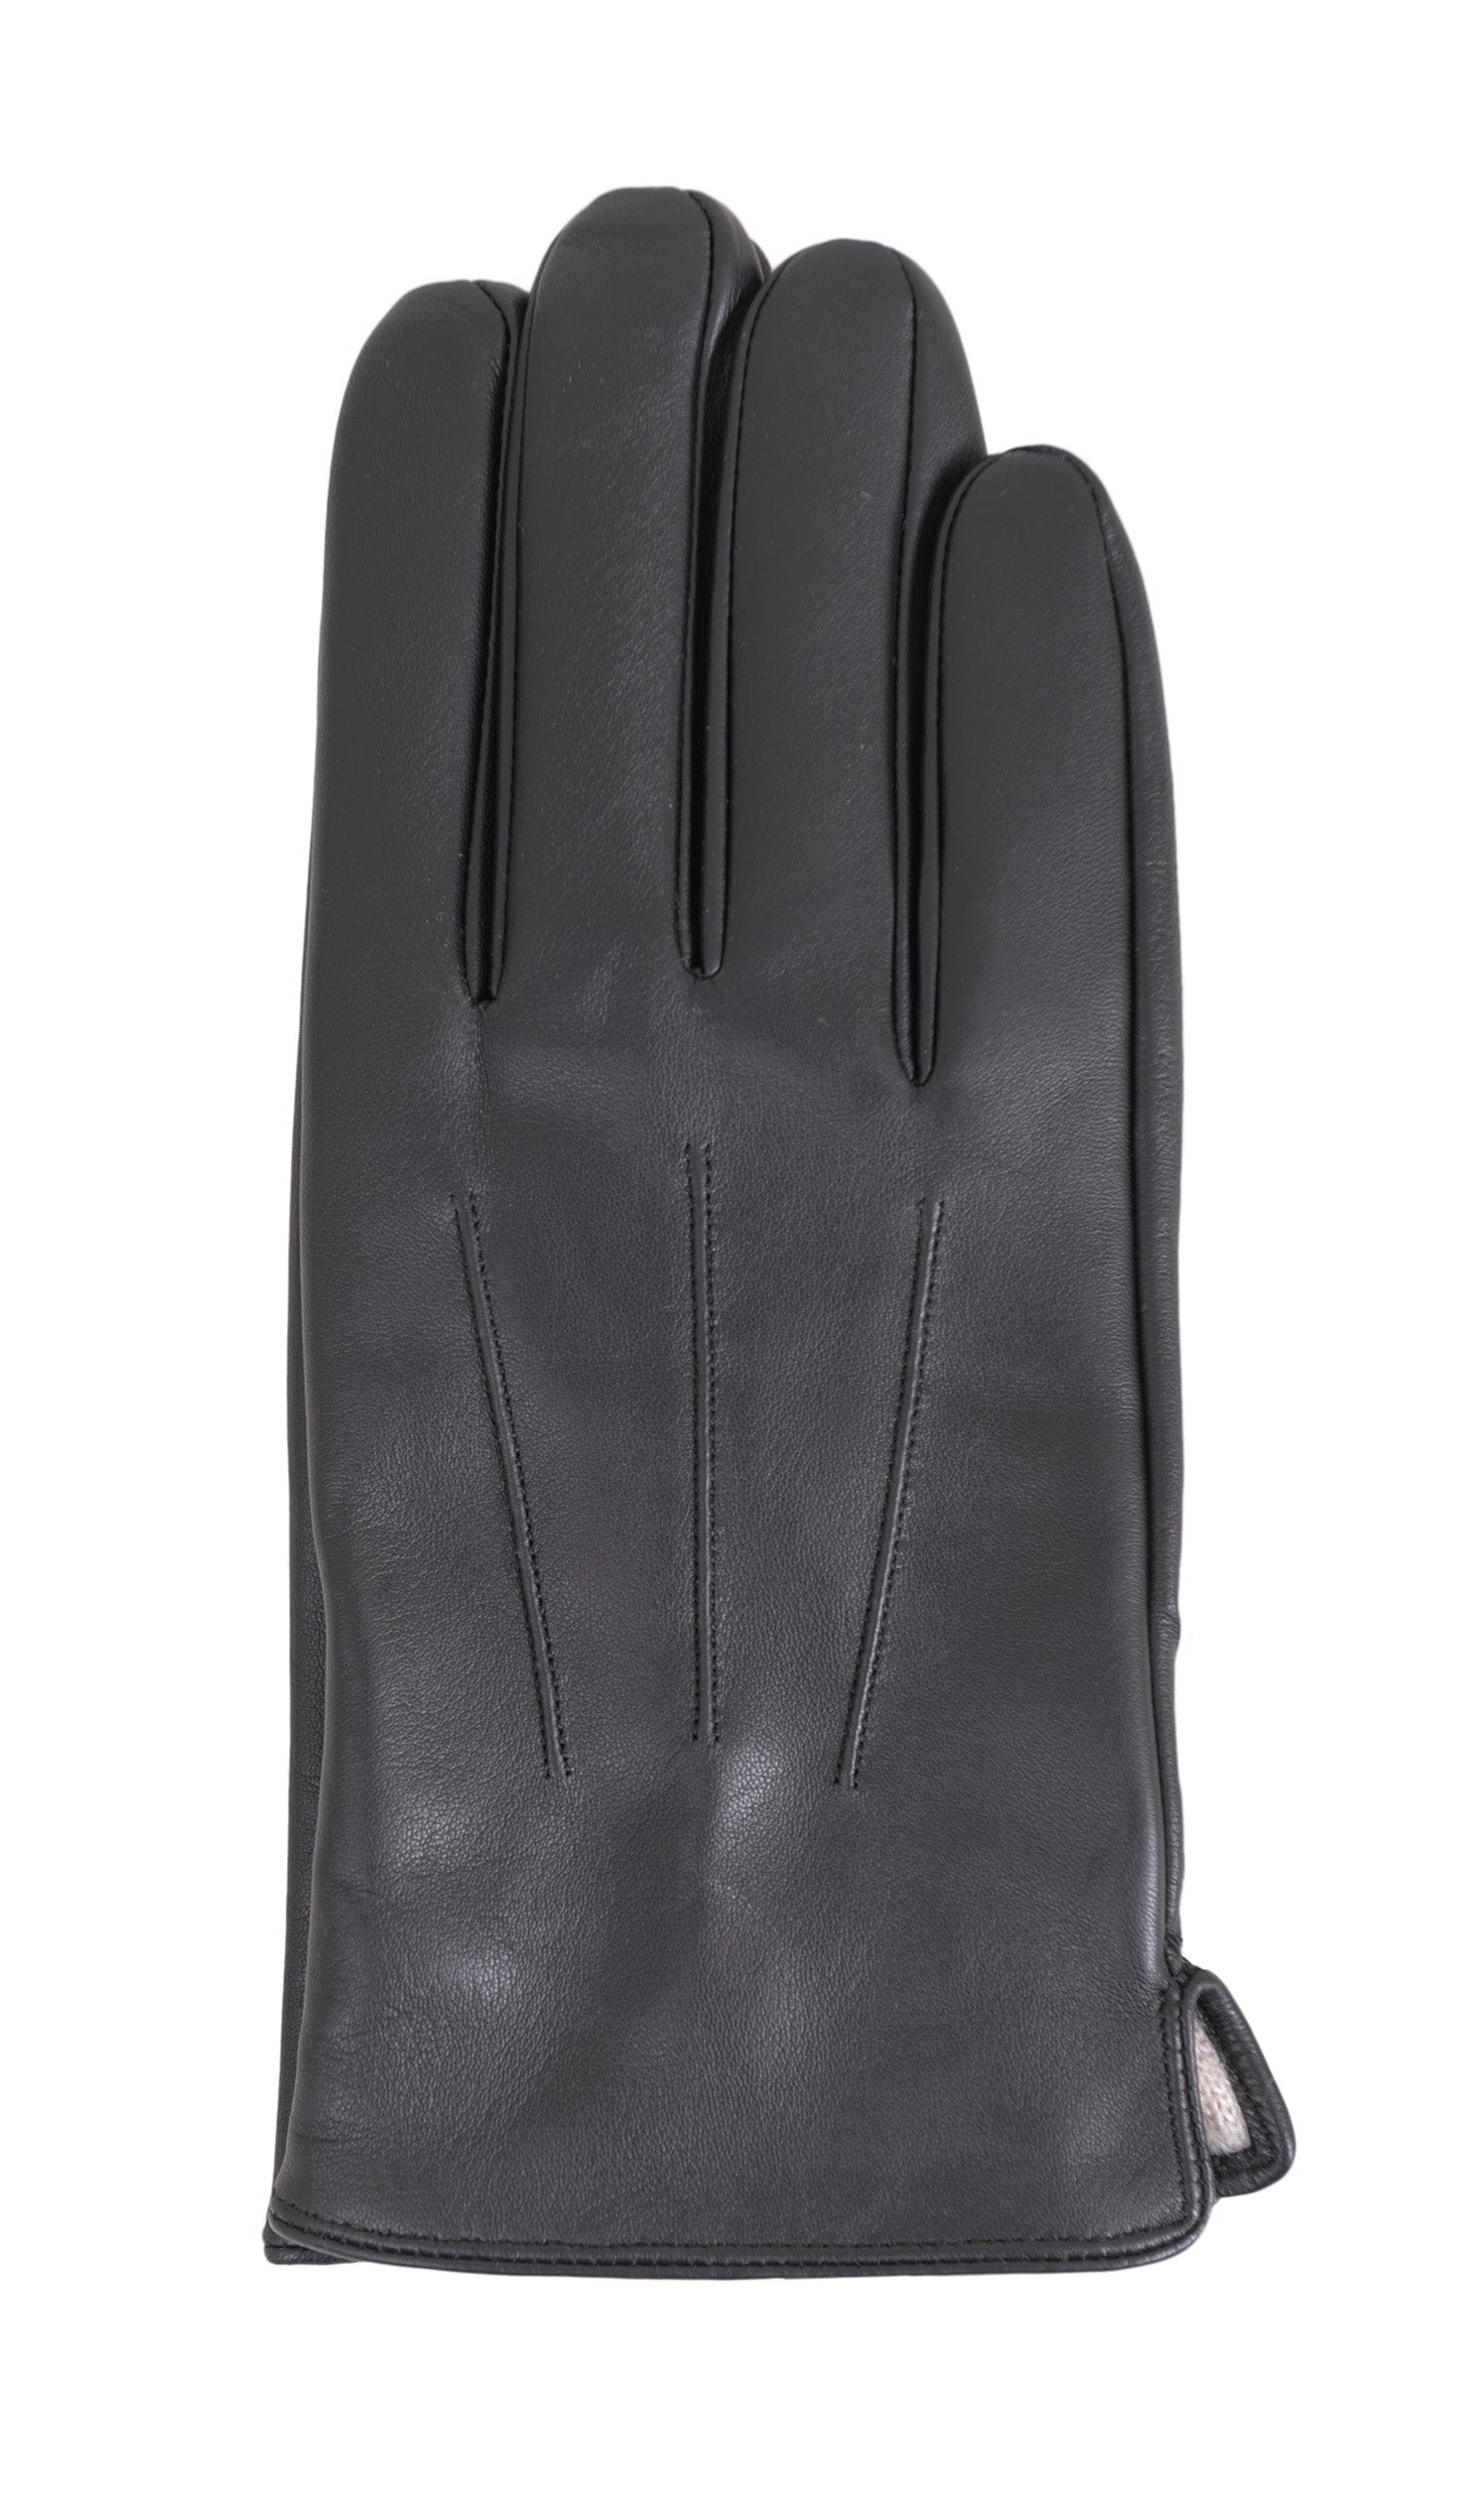 Touchscreen Leather Gloves Men Black - Handmade in Italy XXXL - 12½/13